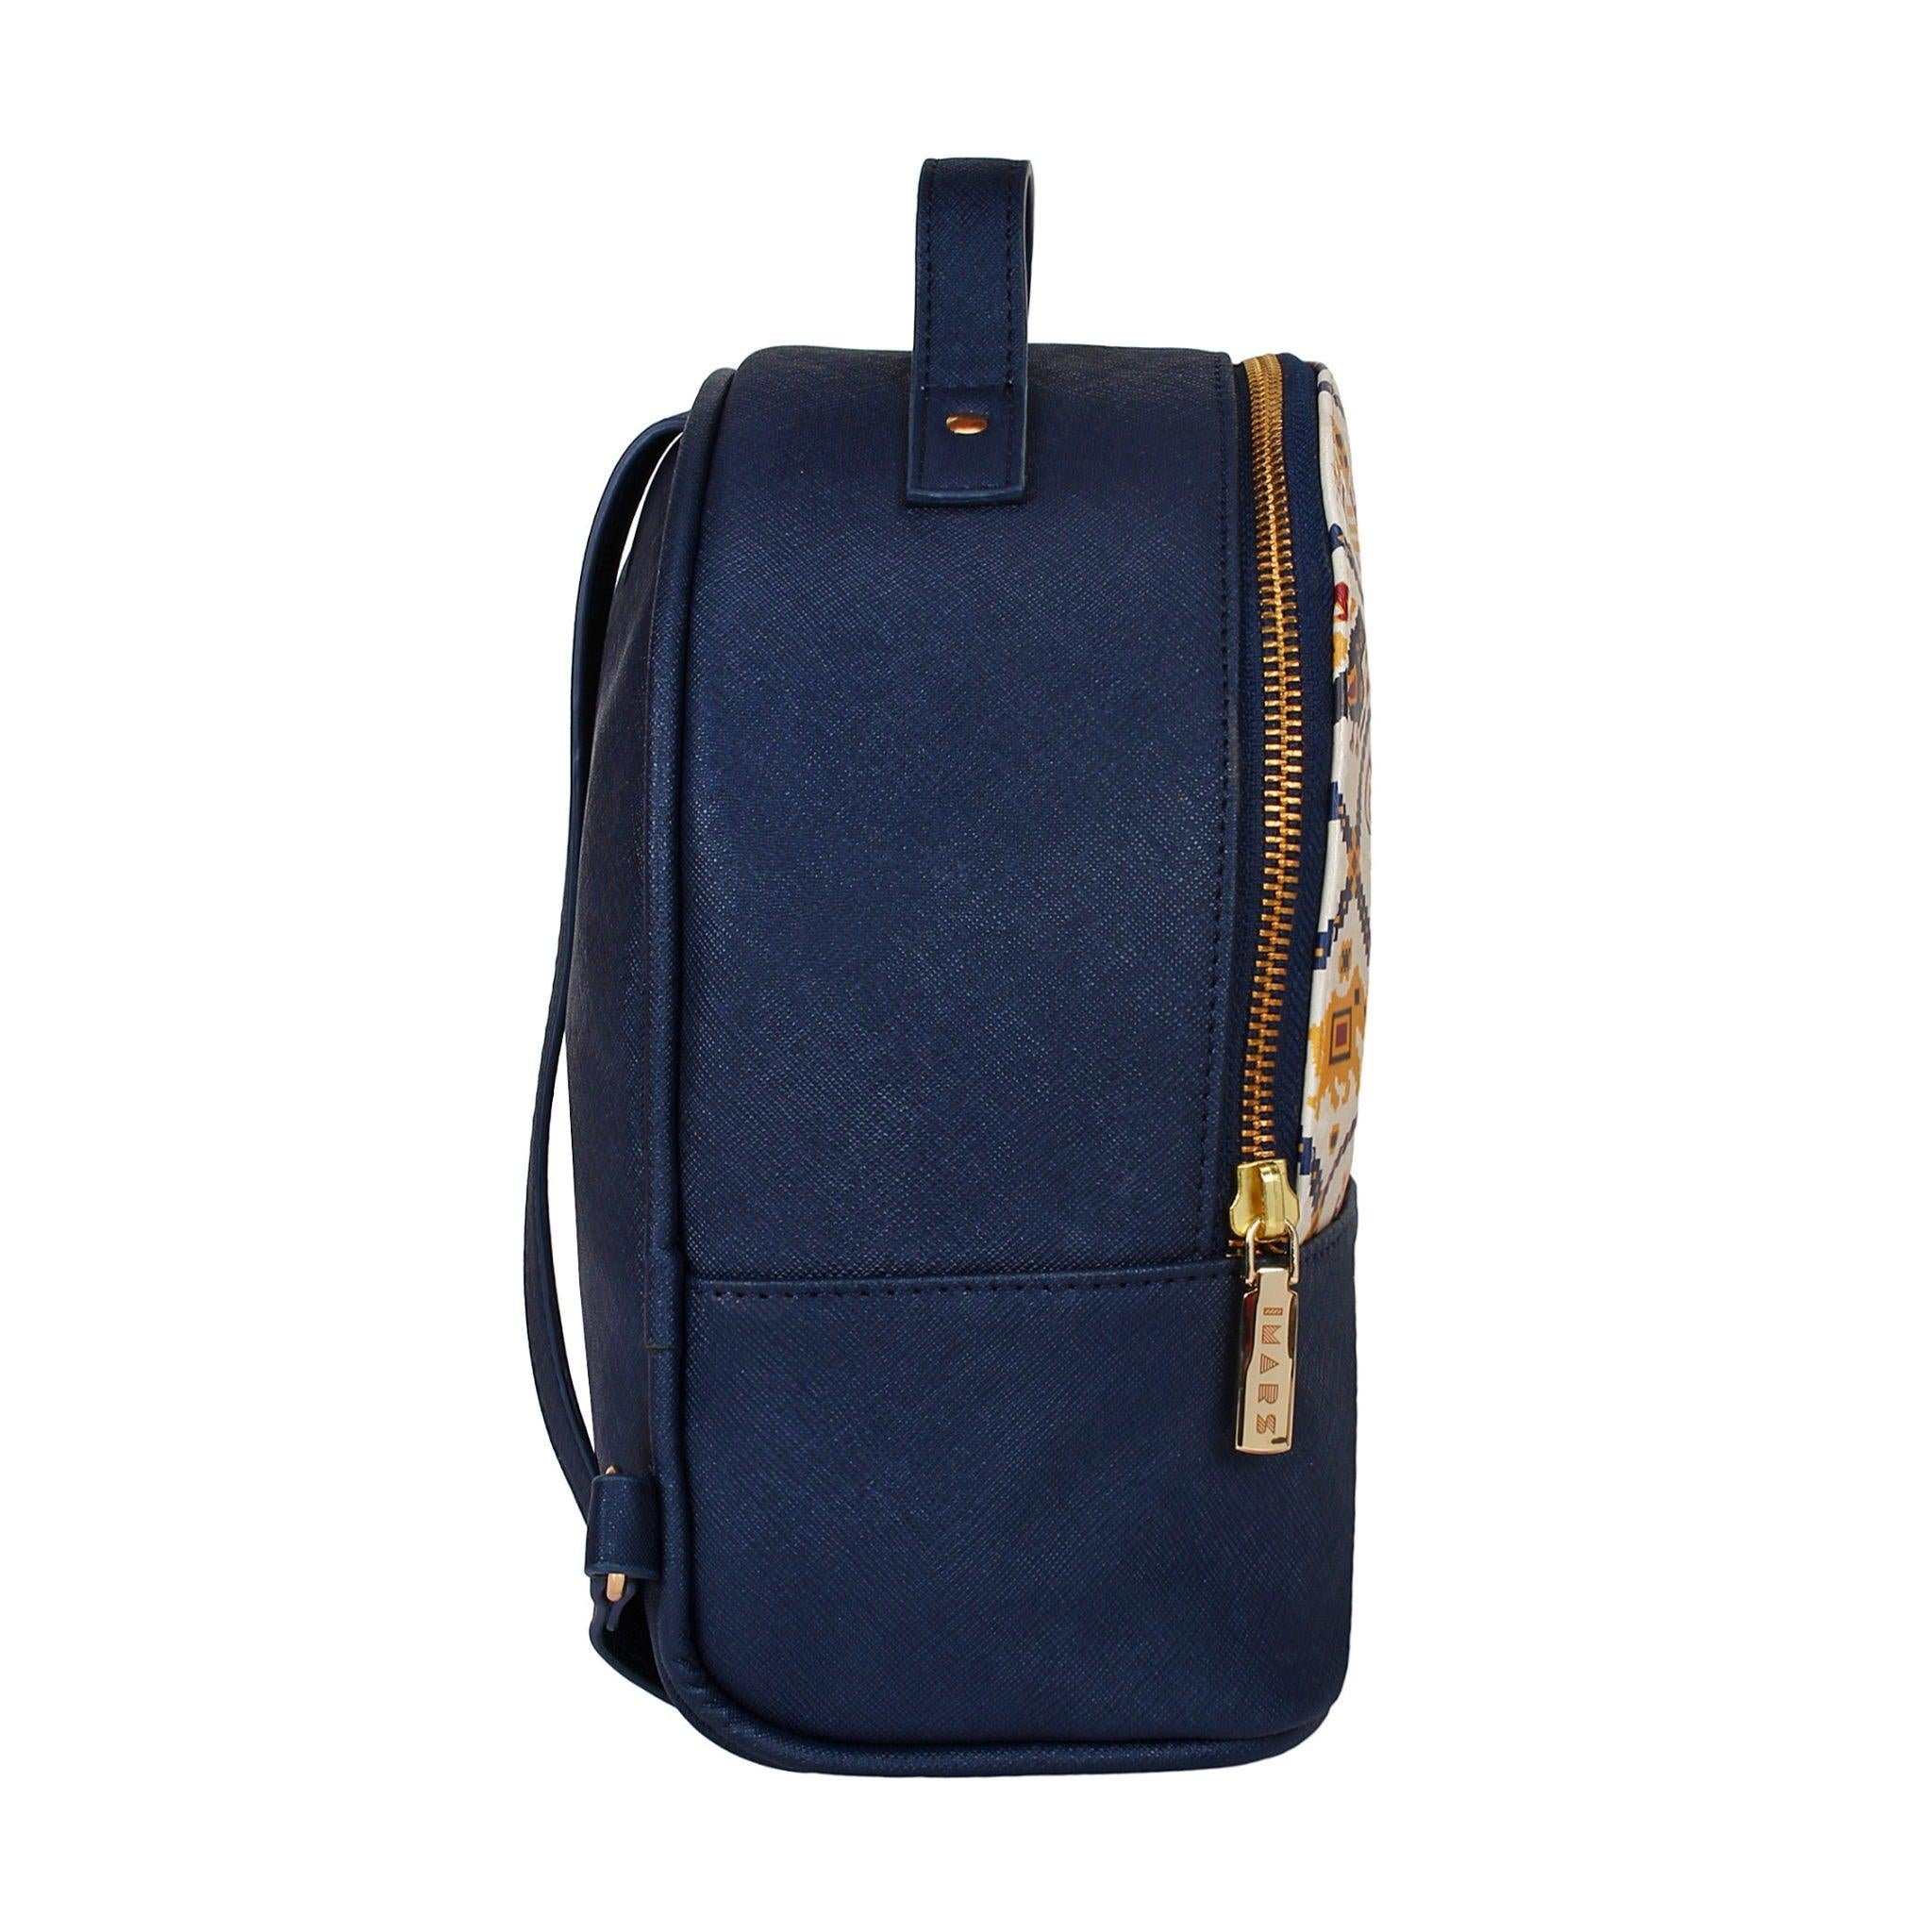 IMARS Backpack (6745338314959)